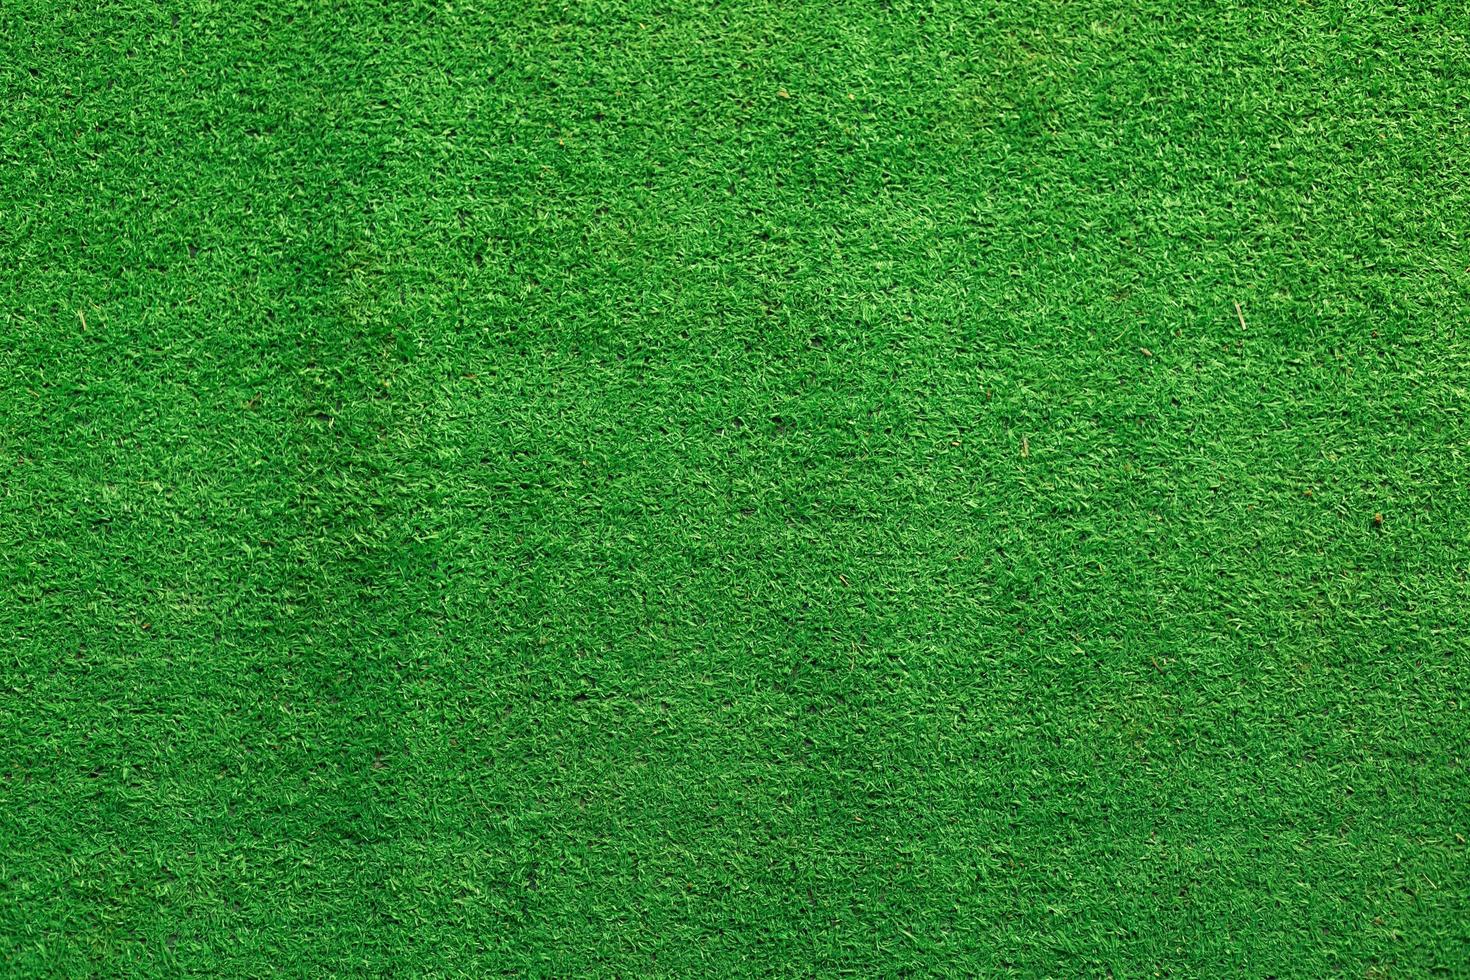 groen kunstgras of terf foto